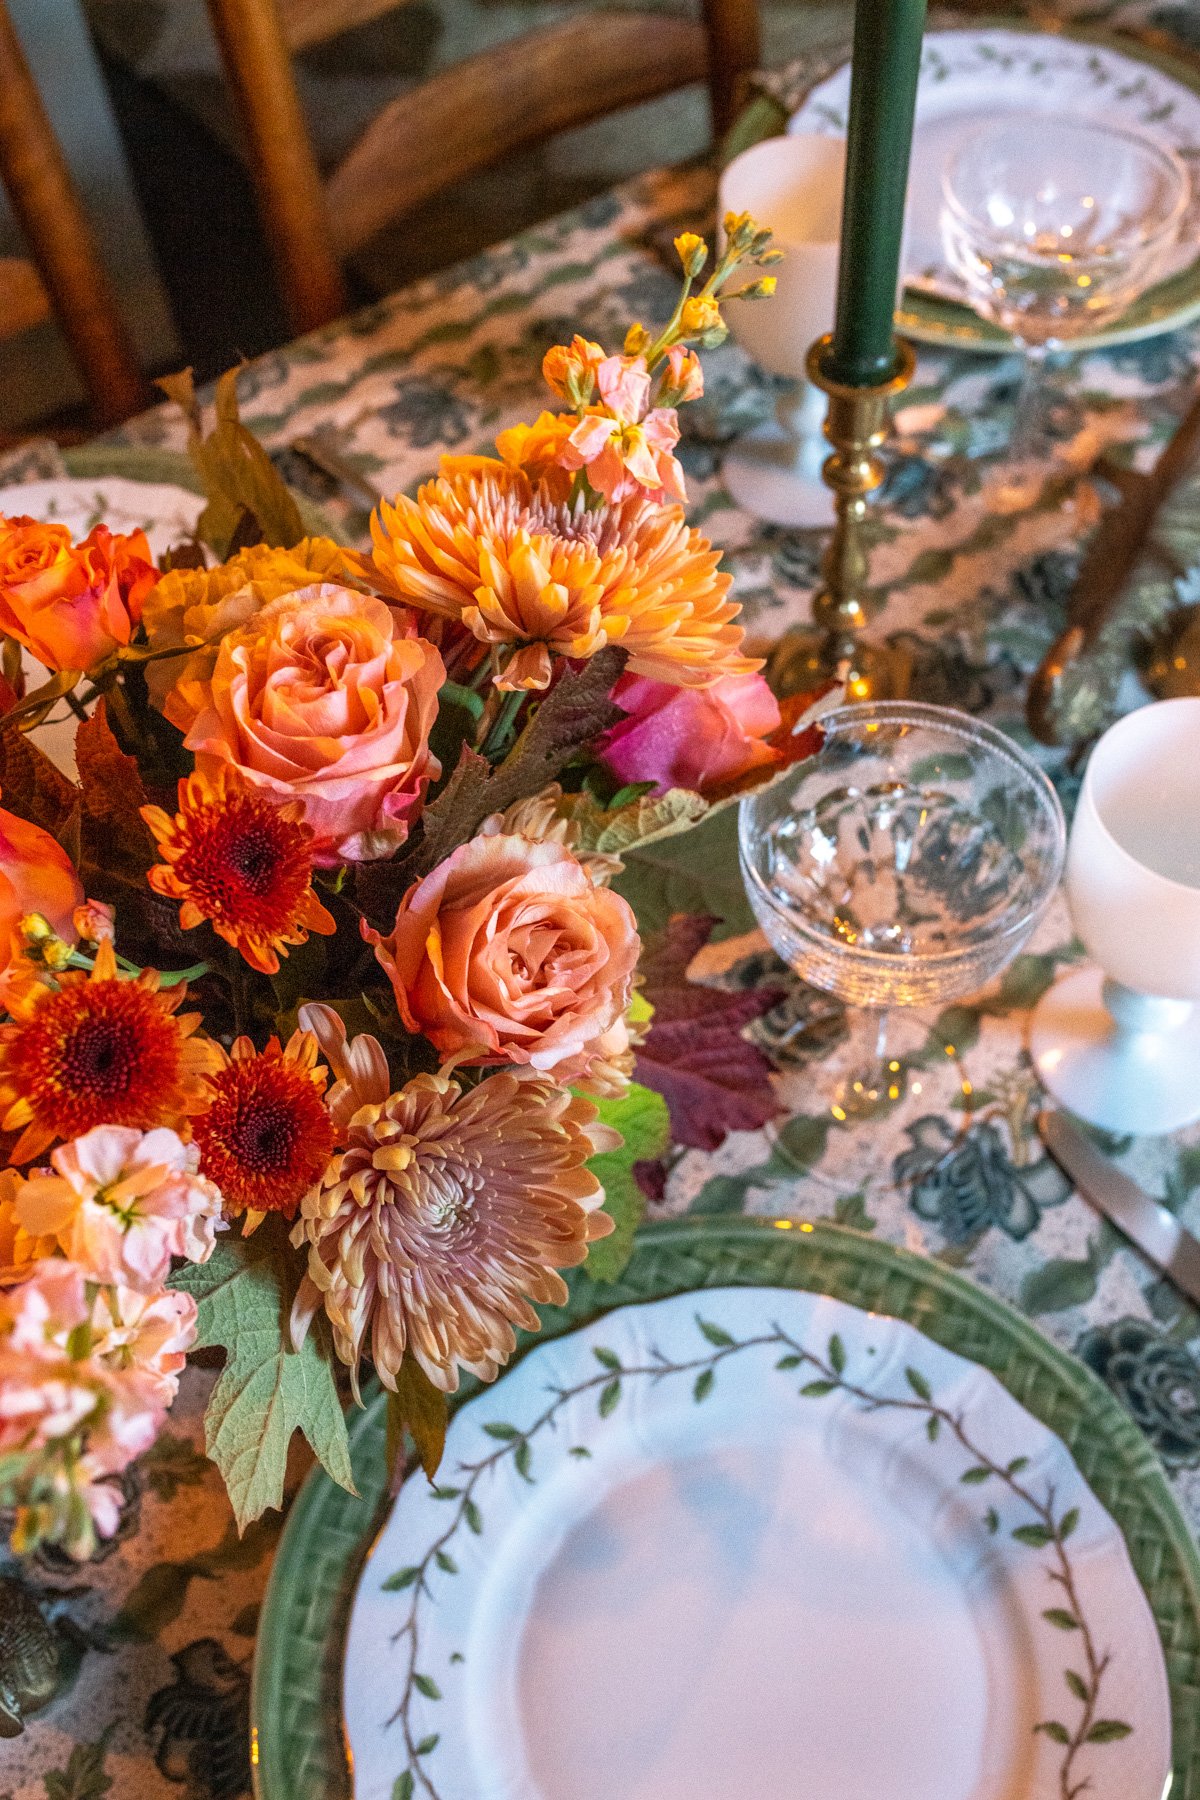 Stacie Flinner x Thanksgiving Table Herend Rothschild Garden-26.jpg